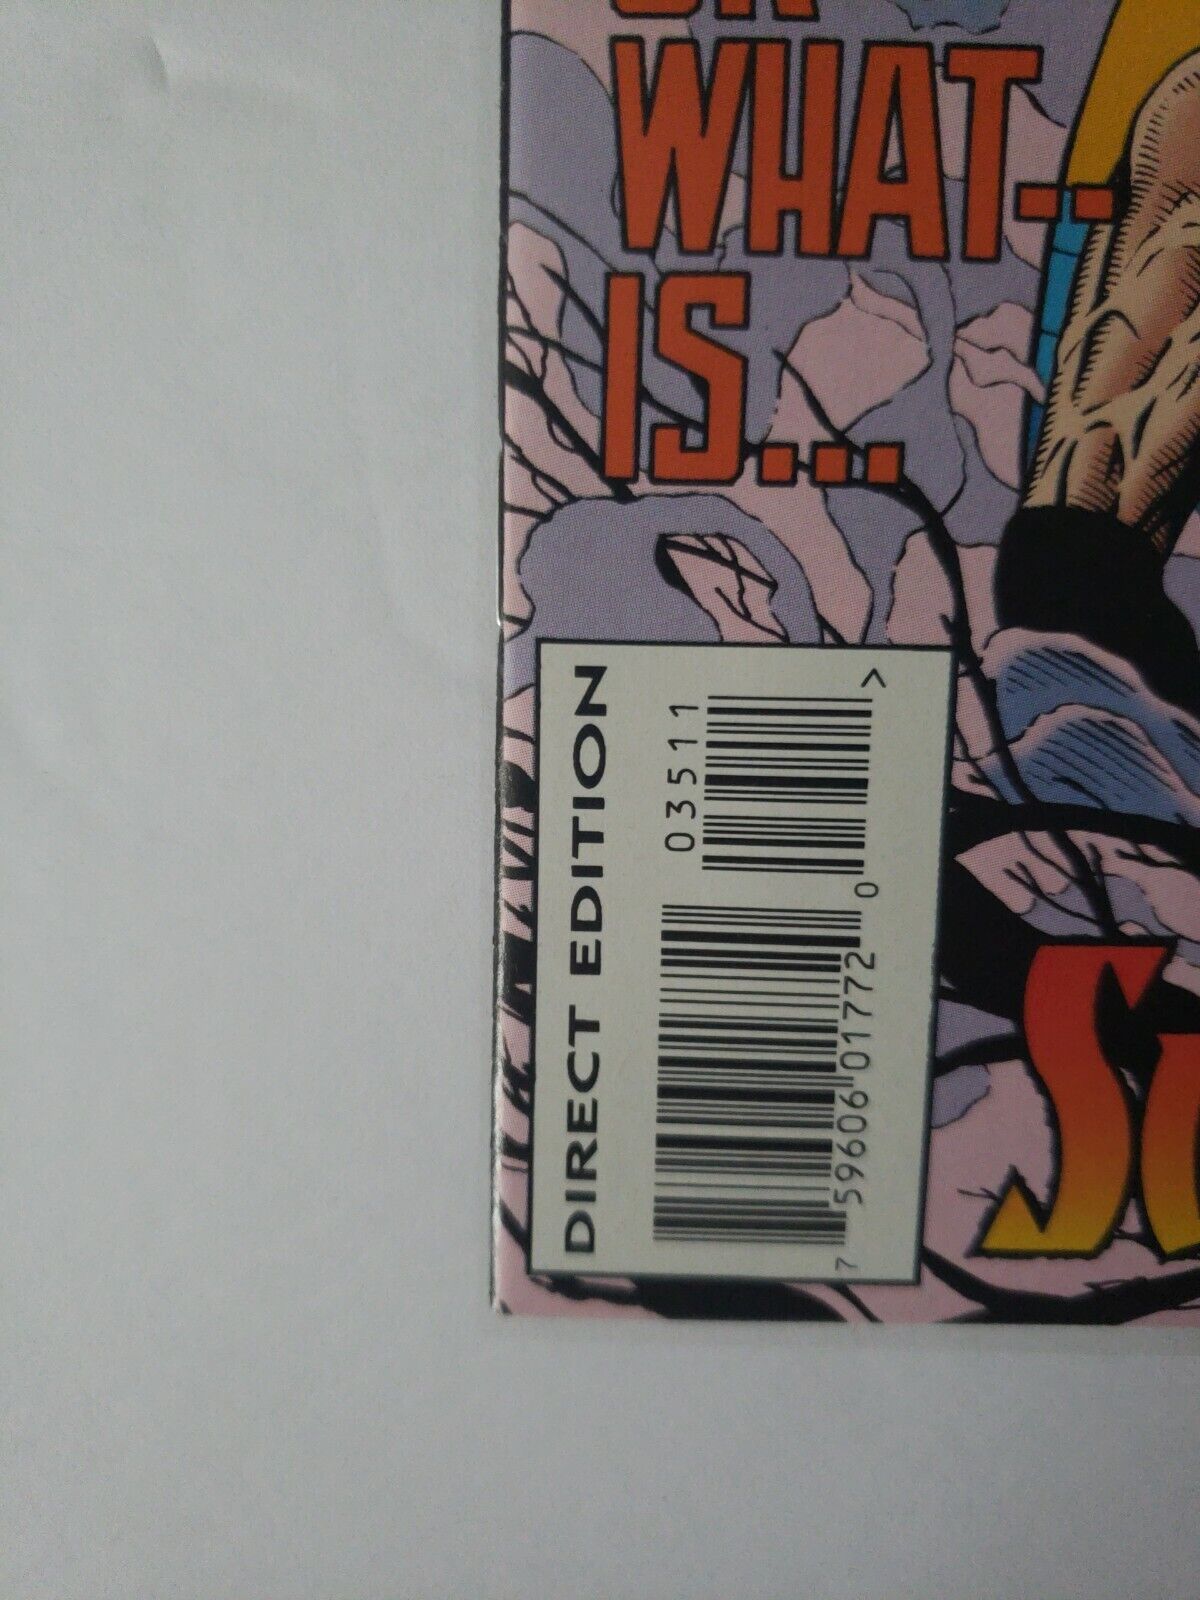 GCD :: Issue :: X-Men #81 [Direct Edition]